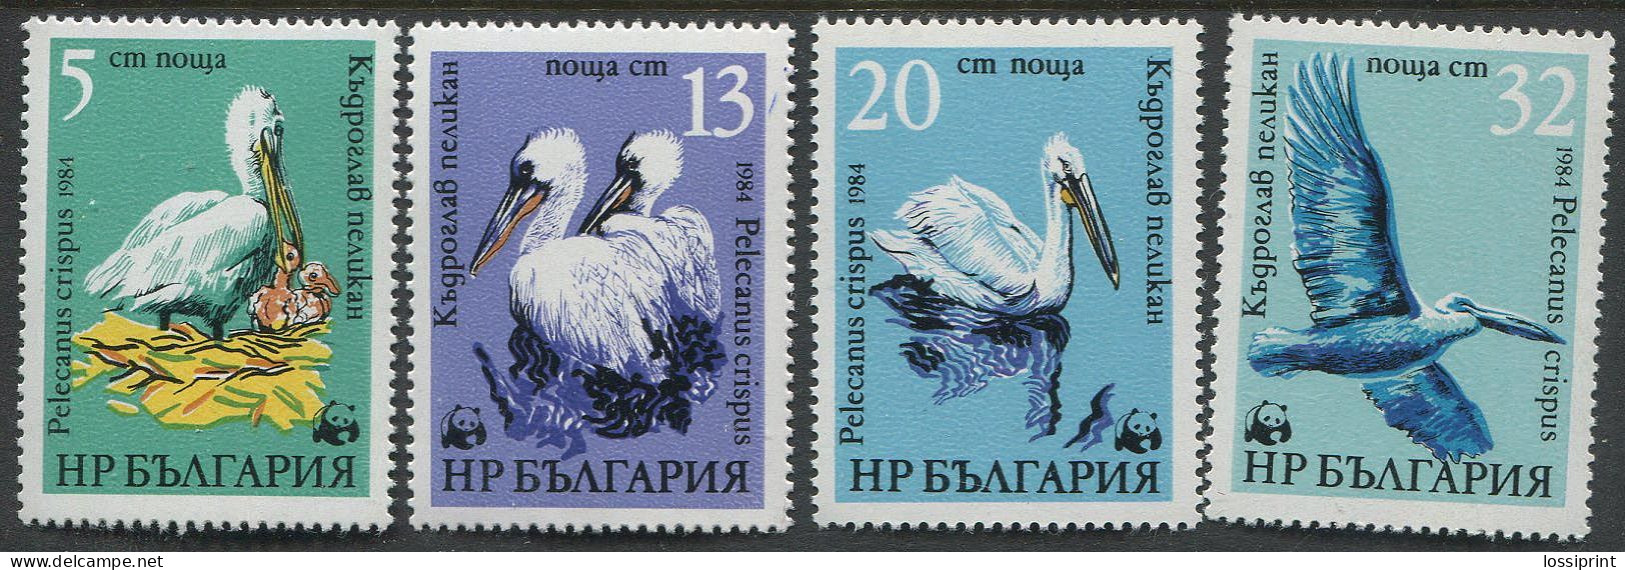 Bulgaria:Unused Stamps Serie Birds, Pelican, WWF, 1984, MNH - Pellicani